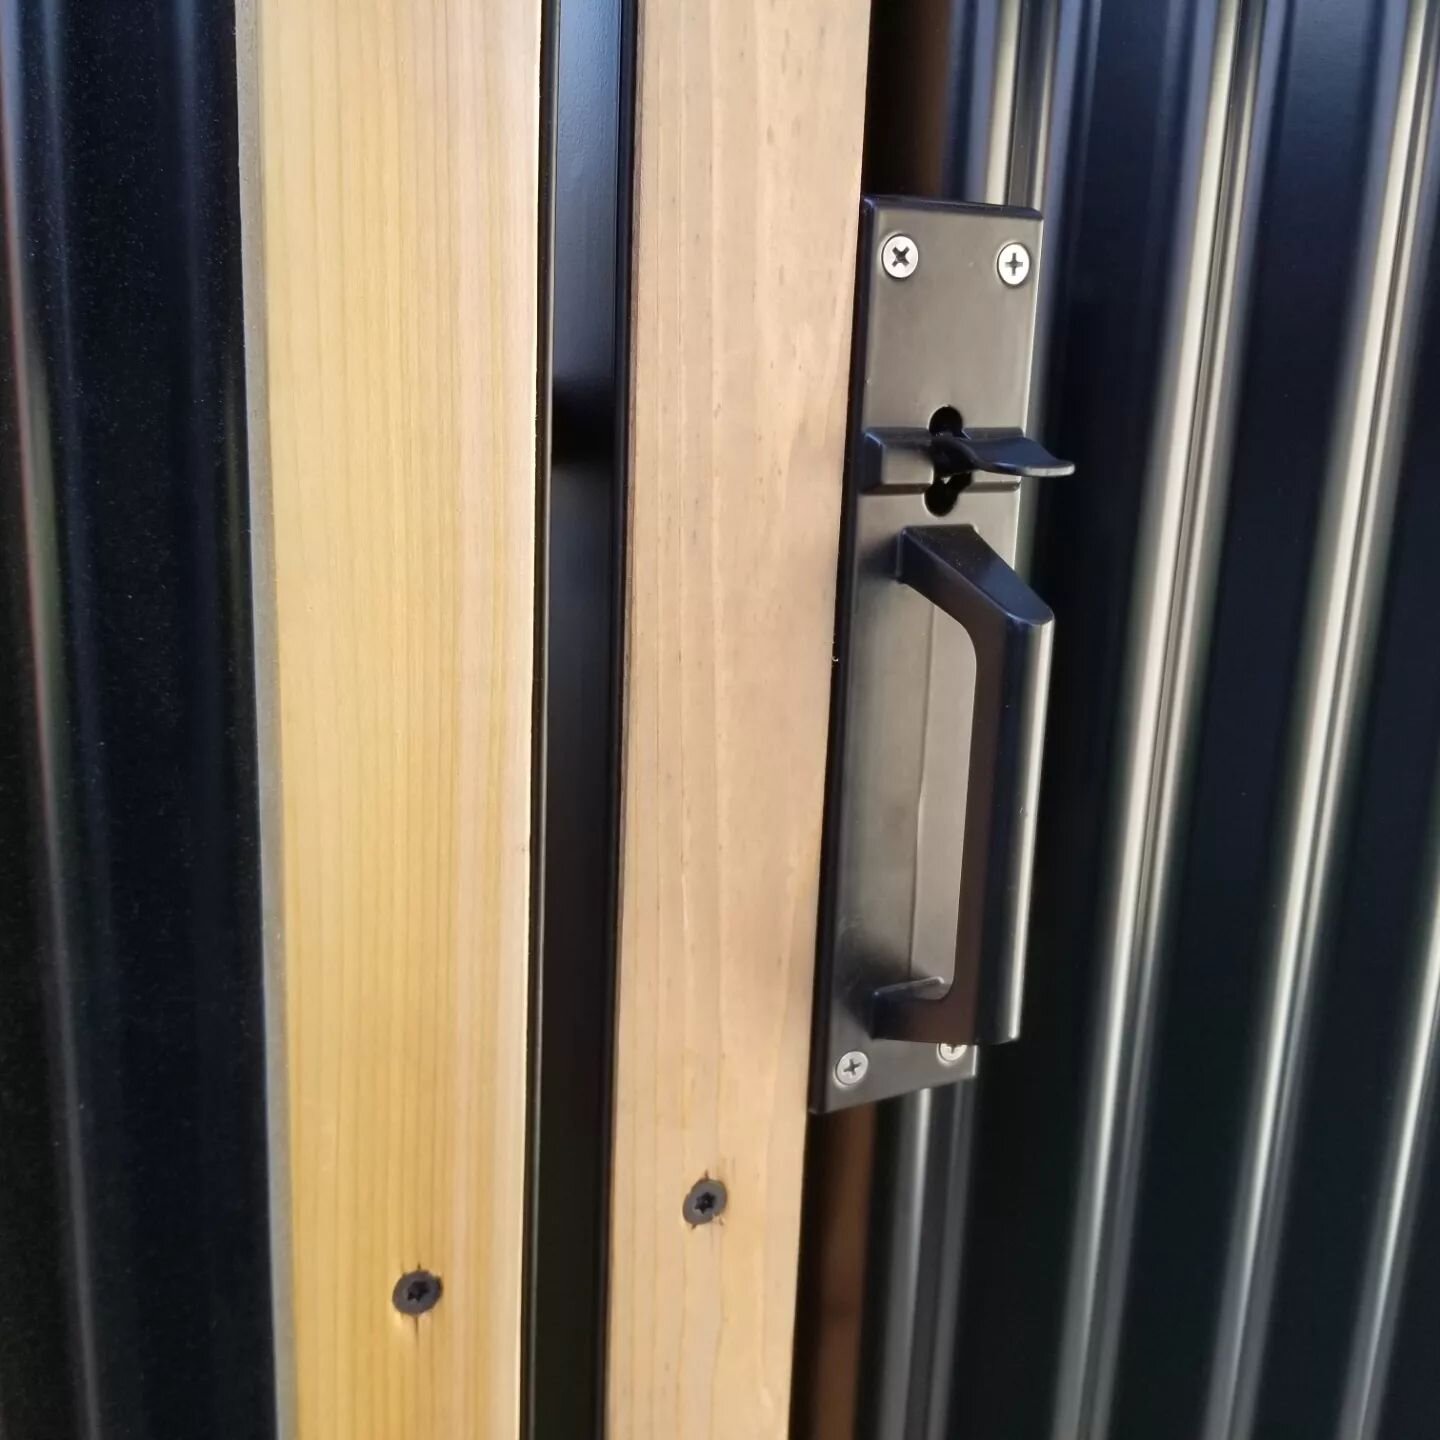 Corrugated Steel Gates / Details

#fraservalleybusiness #custommetalwork #chilliwackfabrication #chilliwackbusiness #custumgates #allenclad